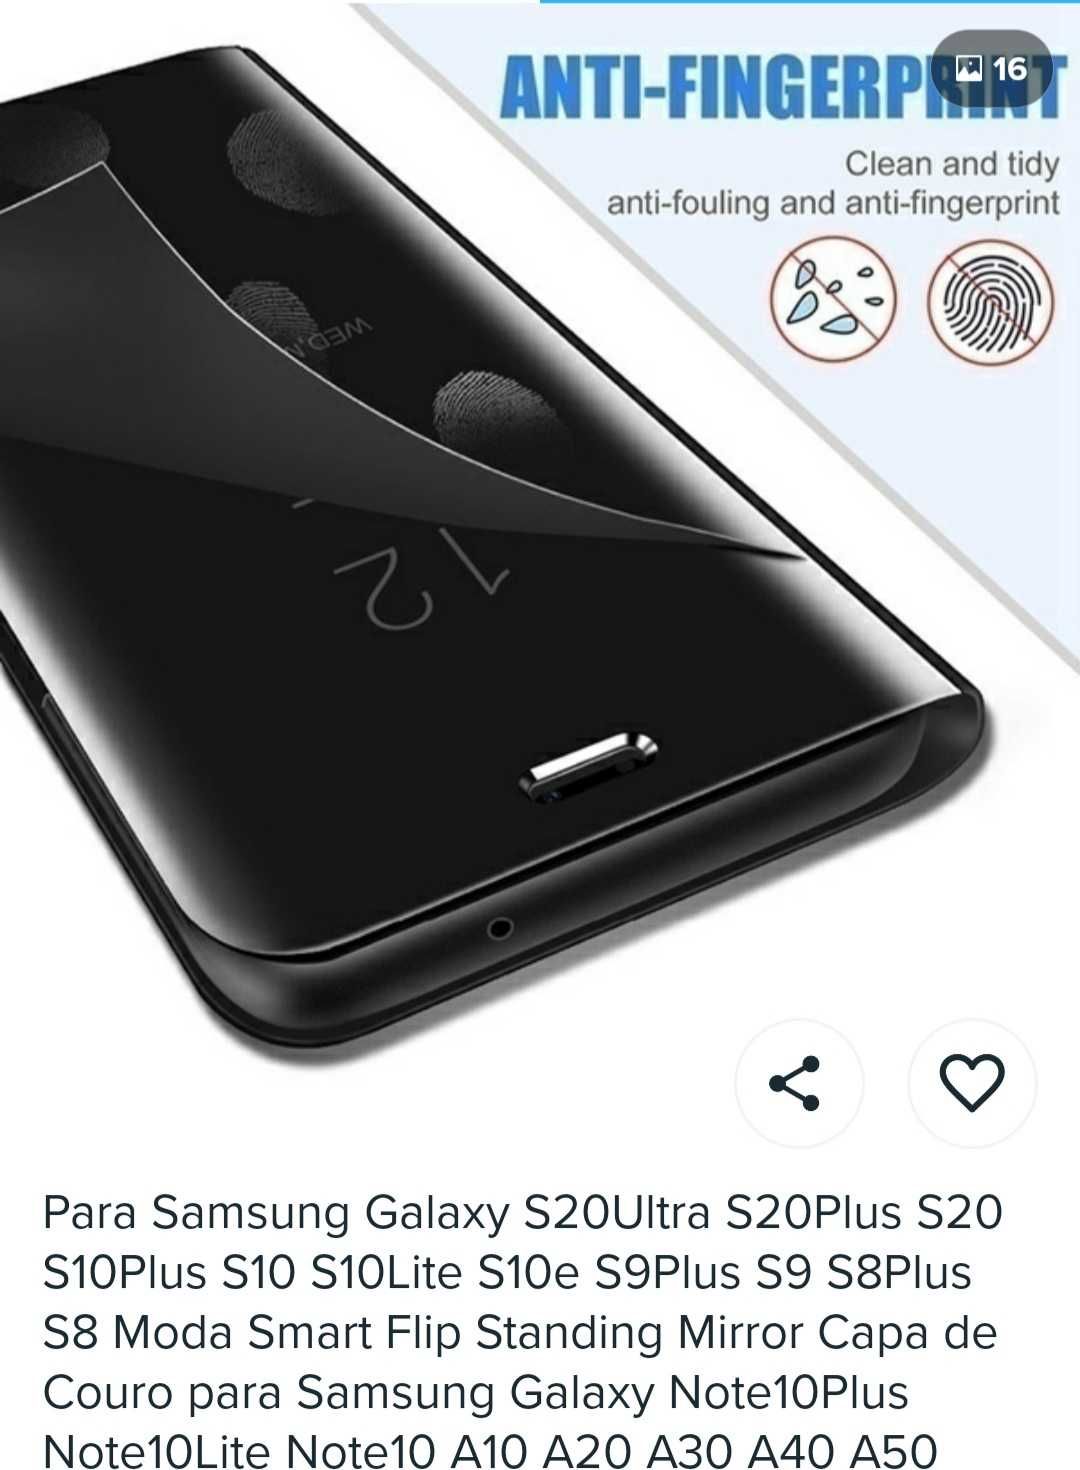 Capa telemóvel,para varios modelos da Samsung nova,ultima unidade